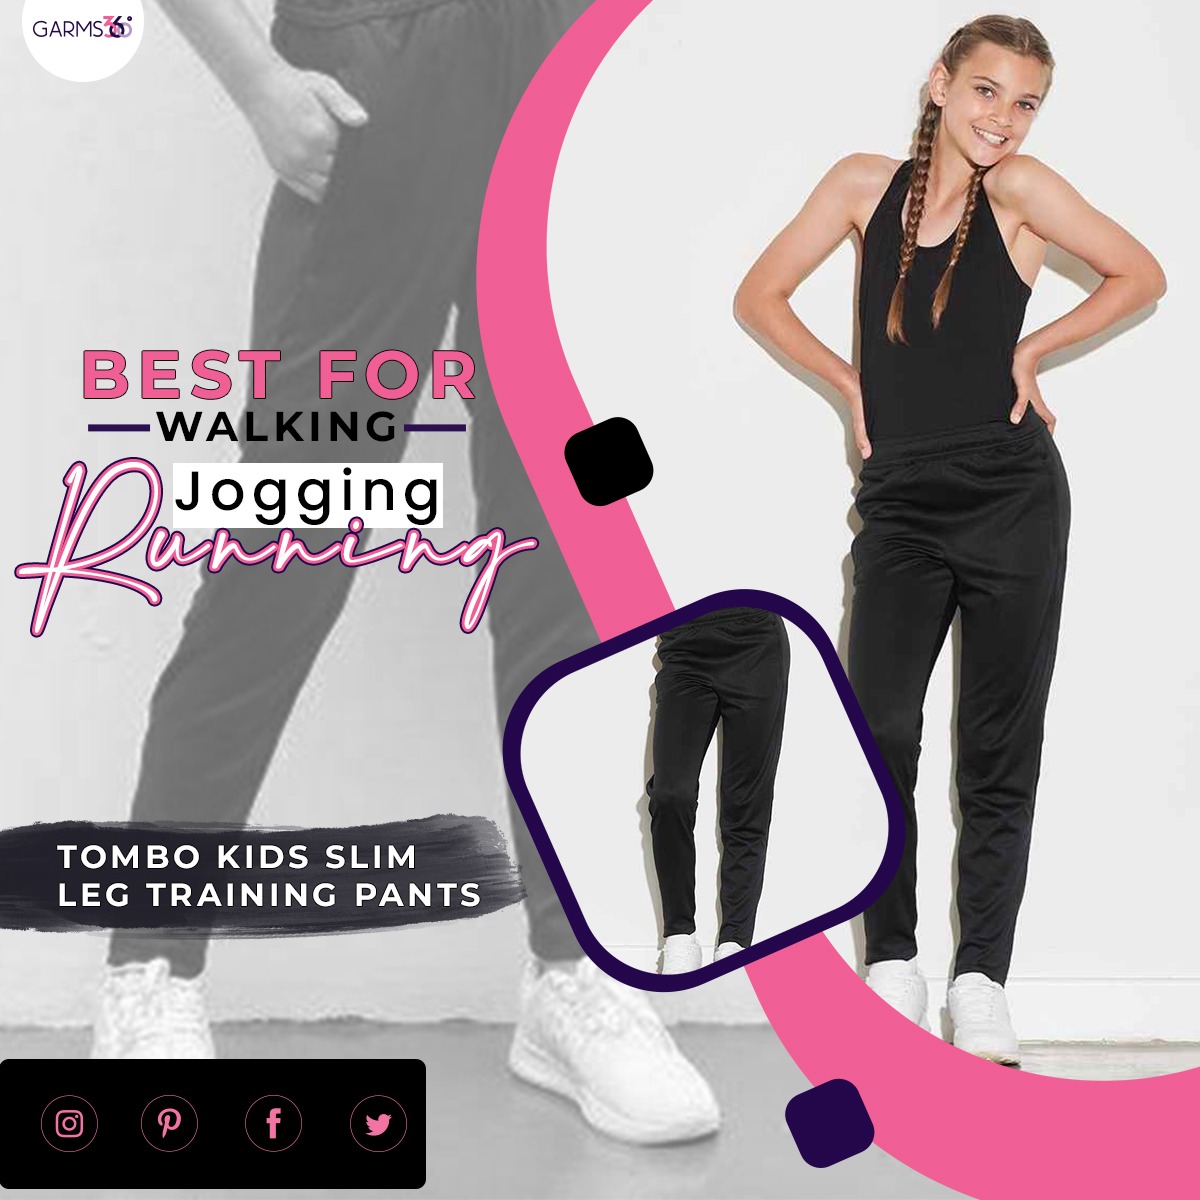 😚Tombo Kids Slim Leg Training Pants🤗

👉Slim fit
👉Two side zip pockets
👉Open leg ends with zips
👉Elasticated waistband
.
.
.
#gams360 #pants #pantsmurah #pantsjapan #pantsuit #pantsu #pantsmurahmeriah #pantshijab #pantsph